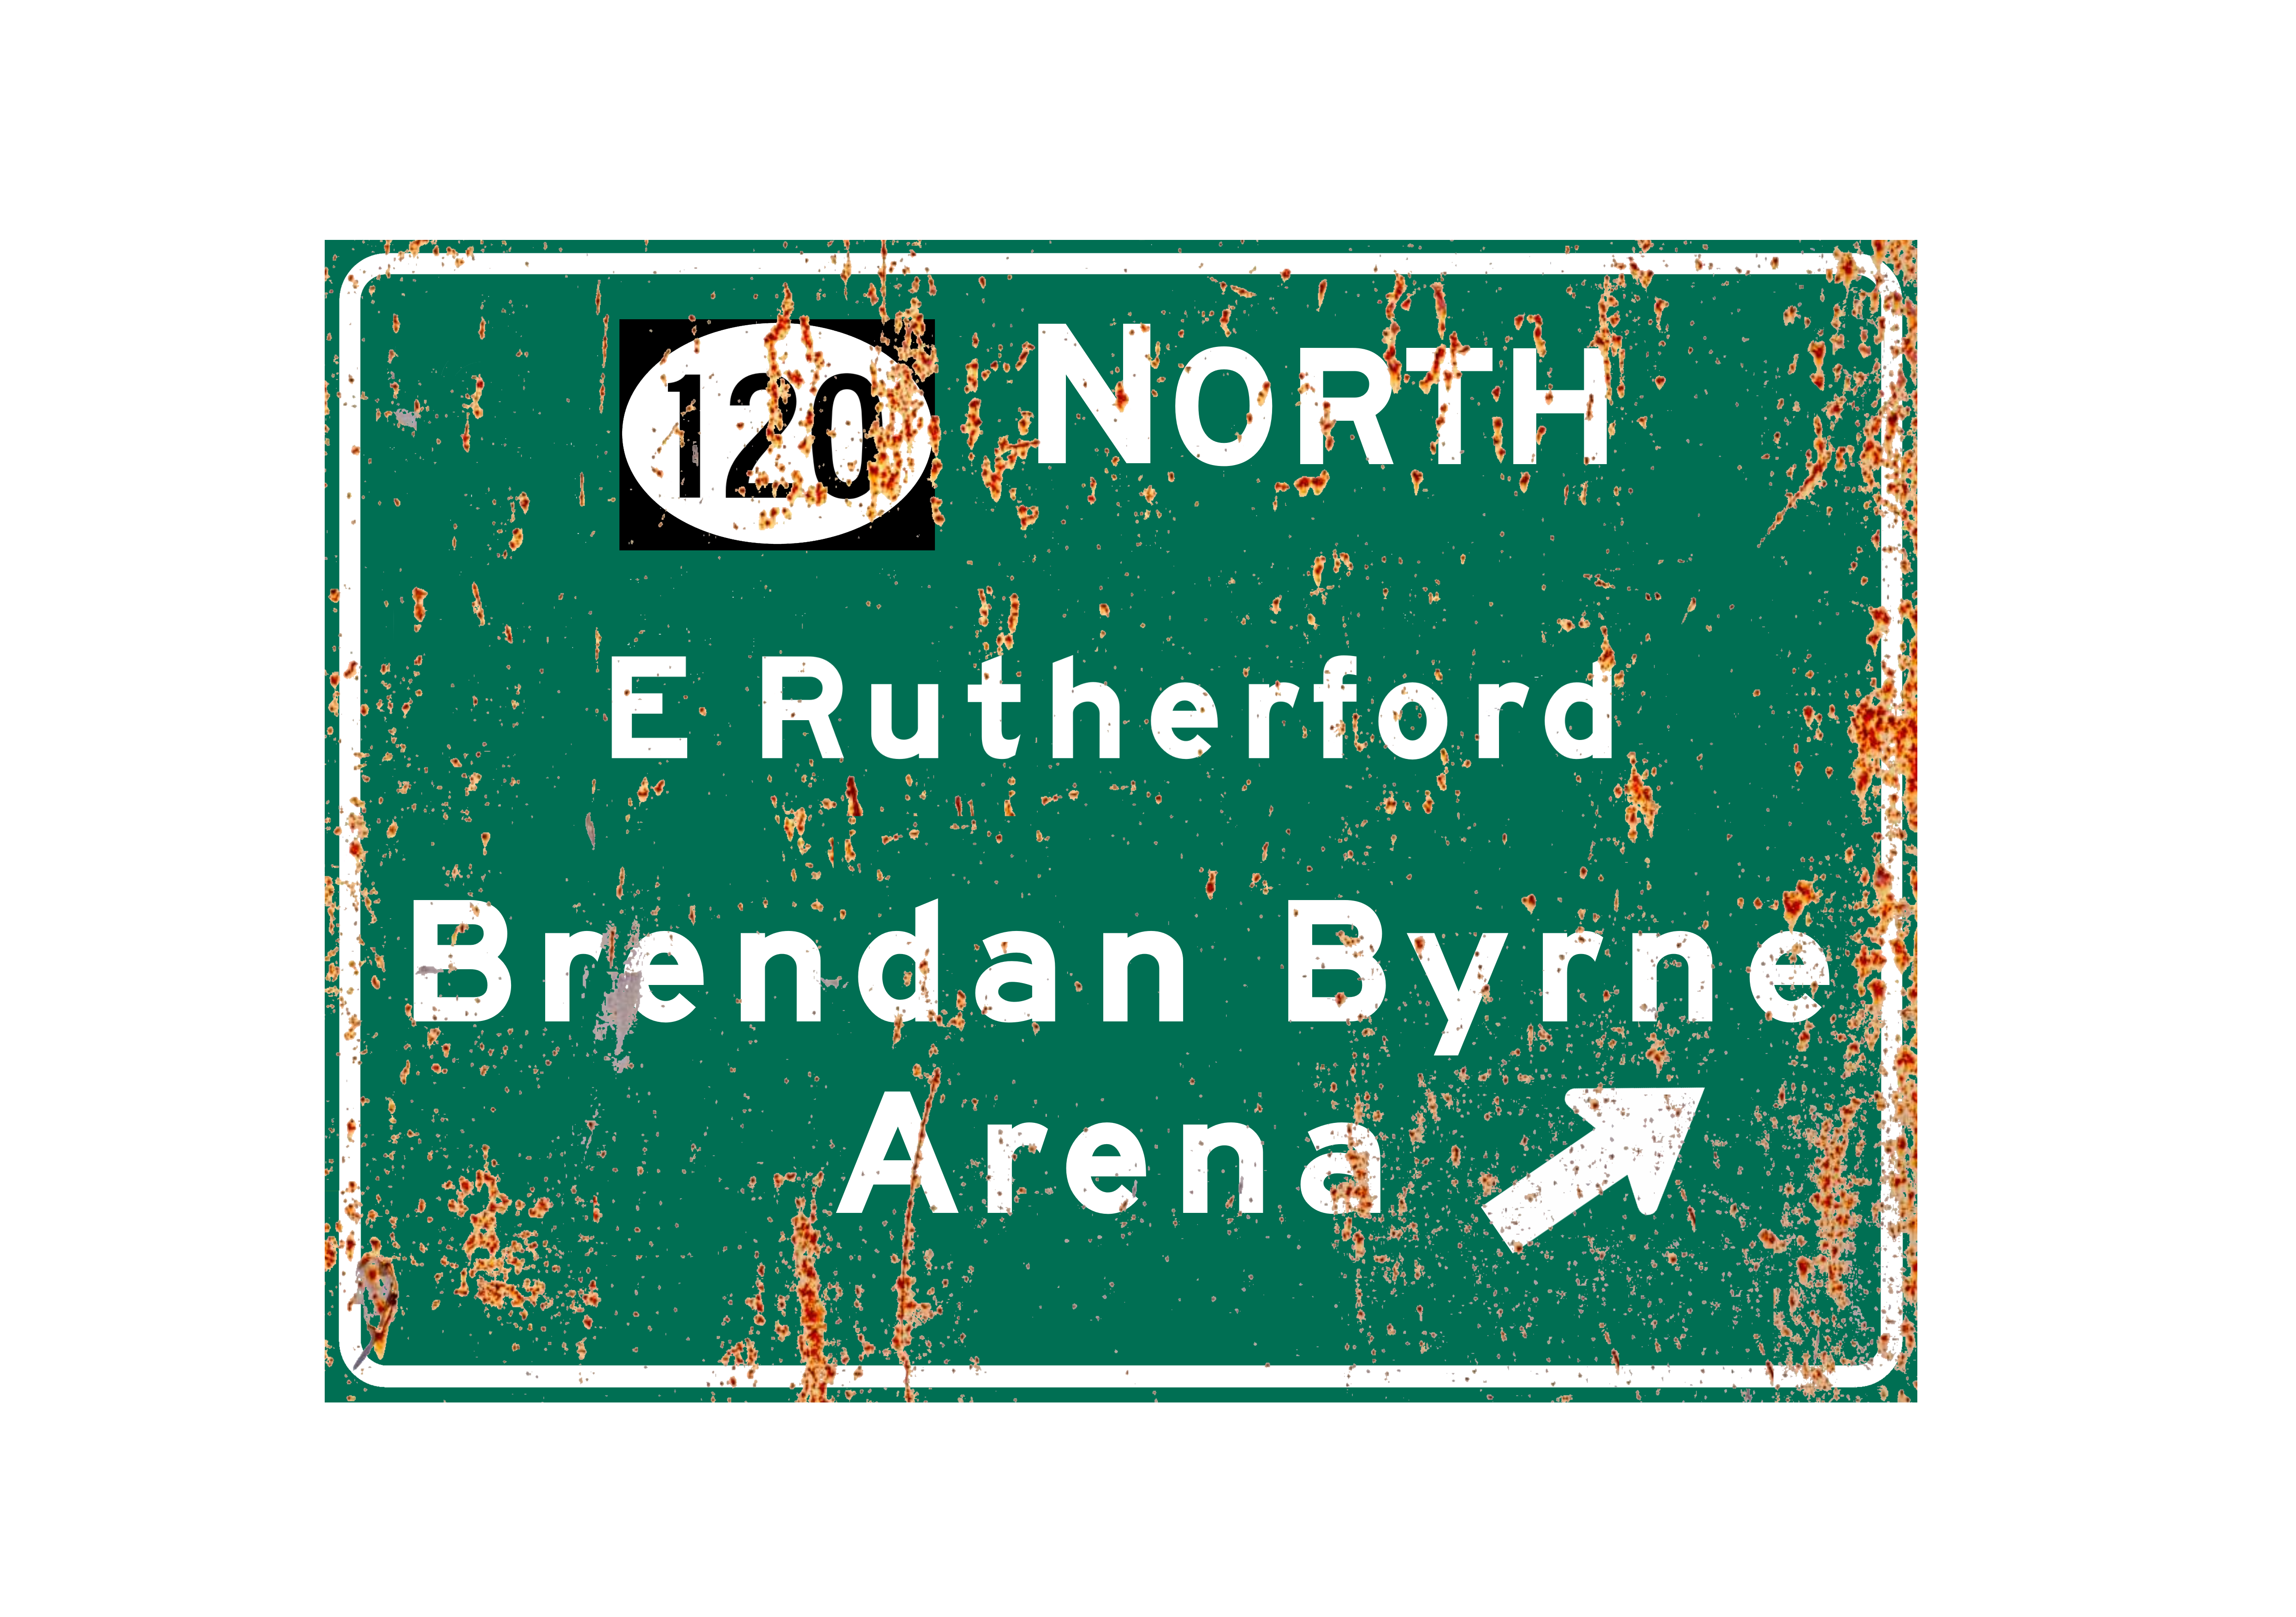 Brendan Byrne Arena – Classic Stadium Metal Sign